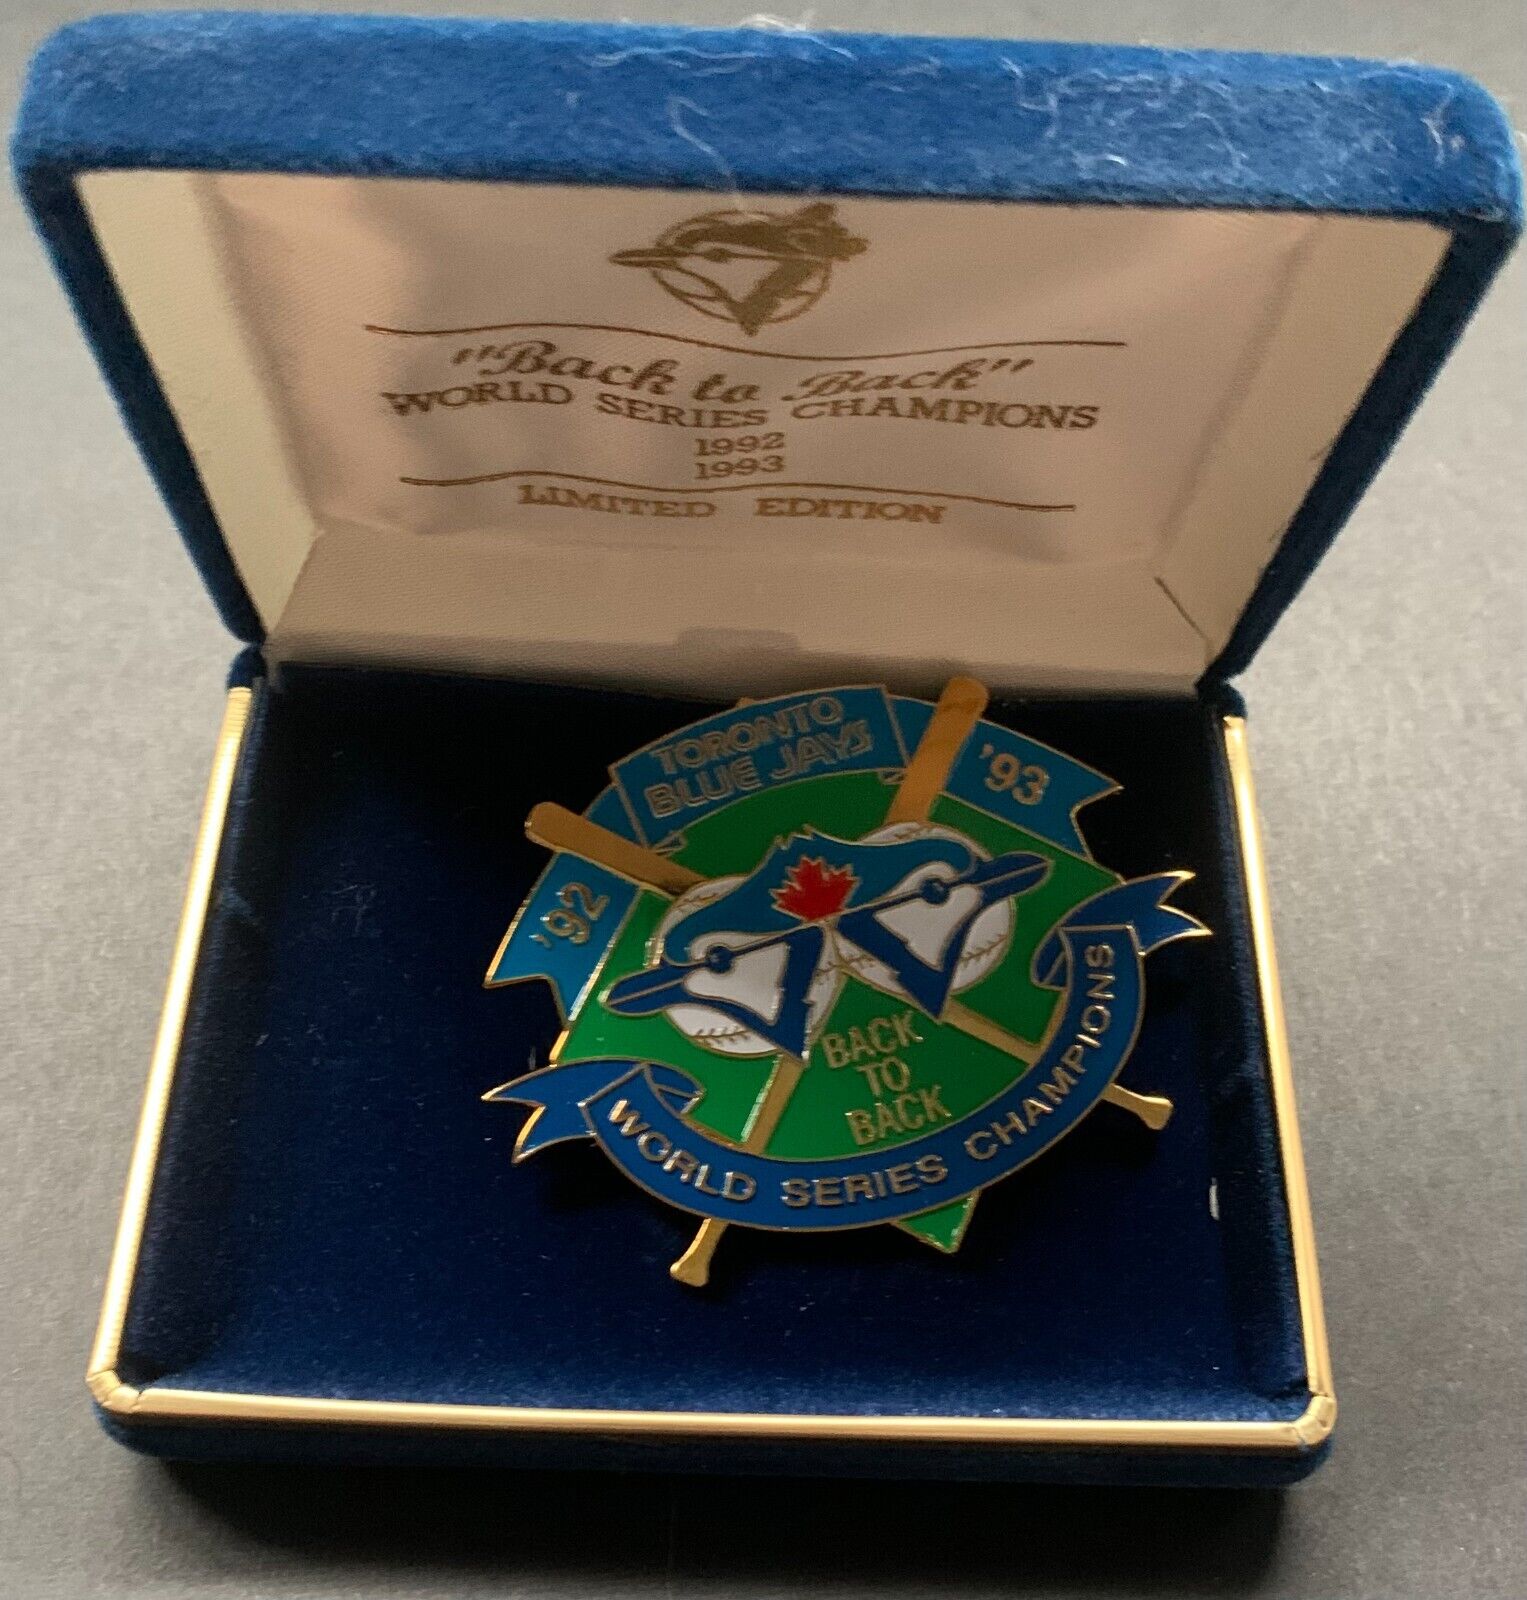 1993 World Series Champions Toronto Blue Jays Limited Edition Pin